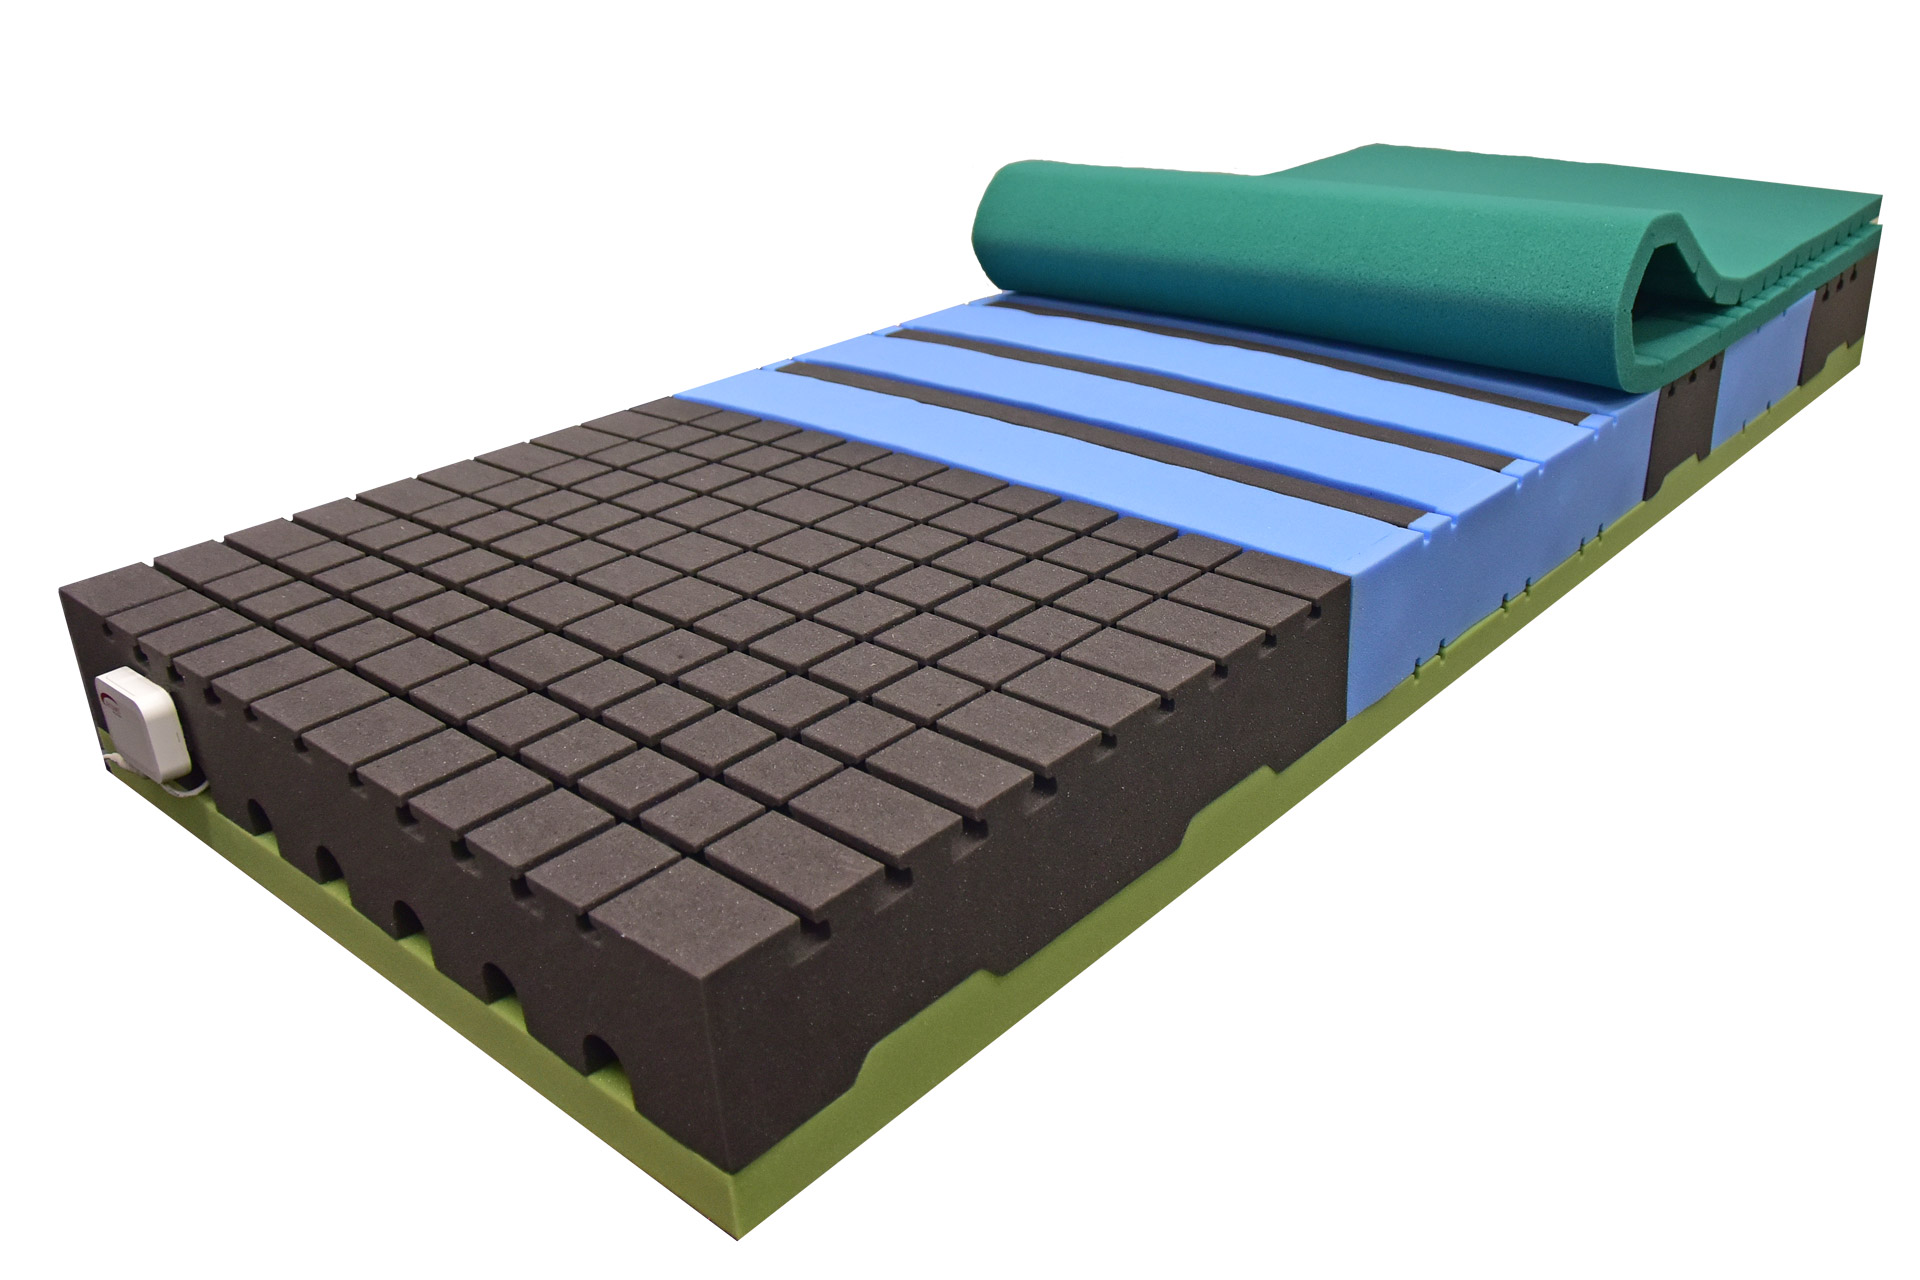 Multi-dynamic elements in customer's own mattress